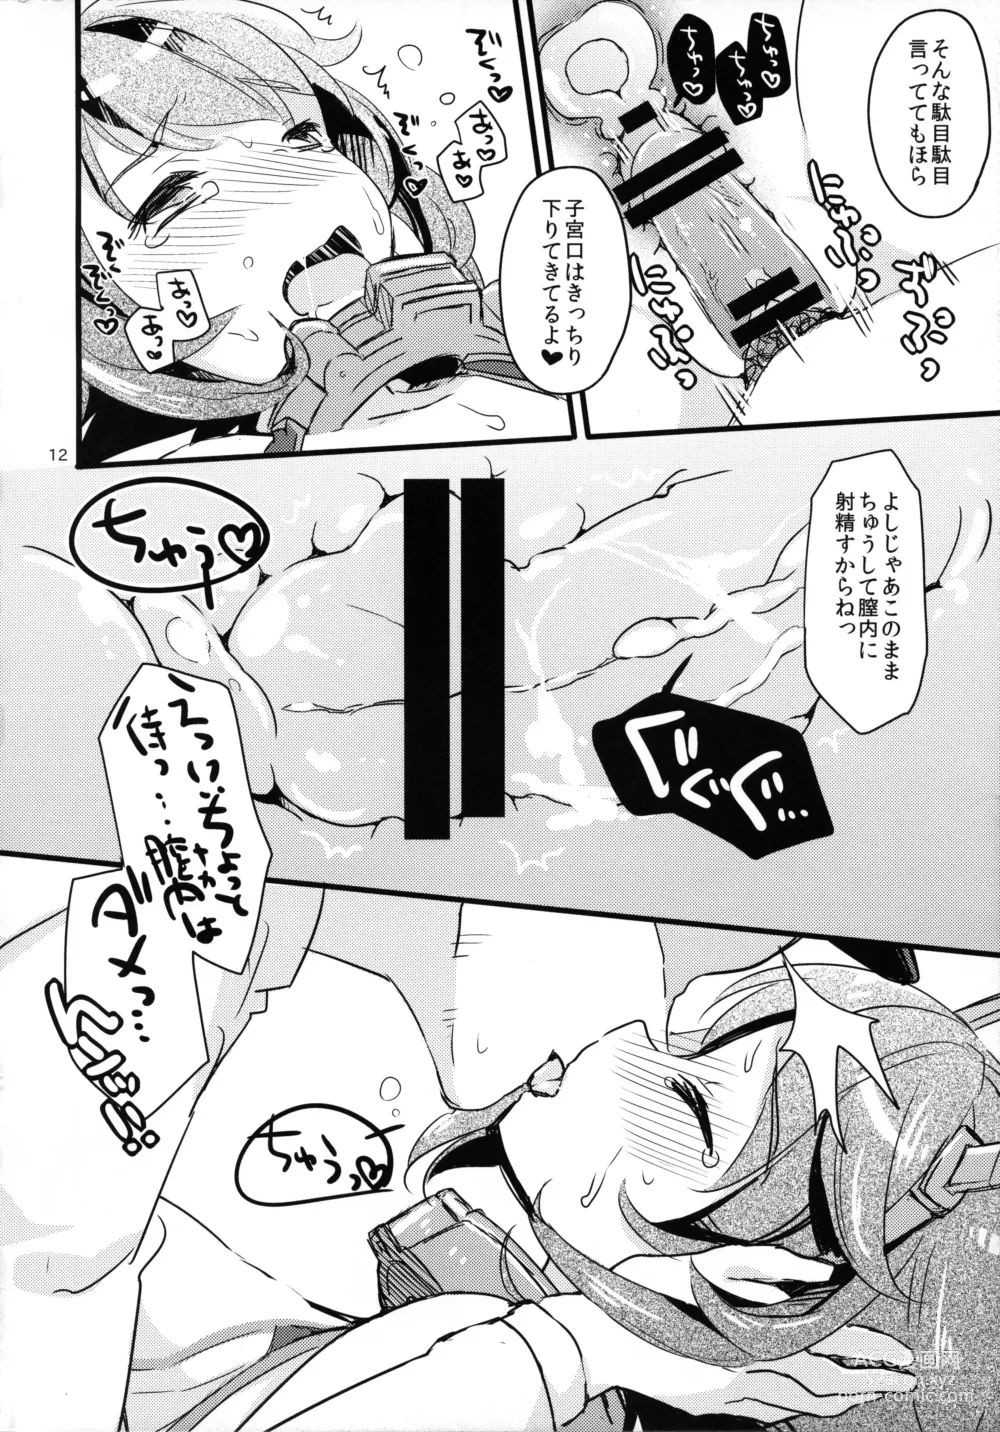 Page 11 of doujinshi FRUSTRATION